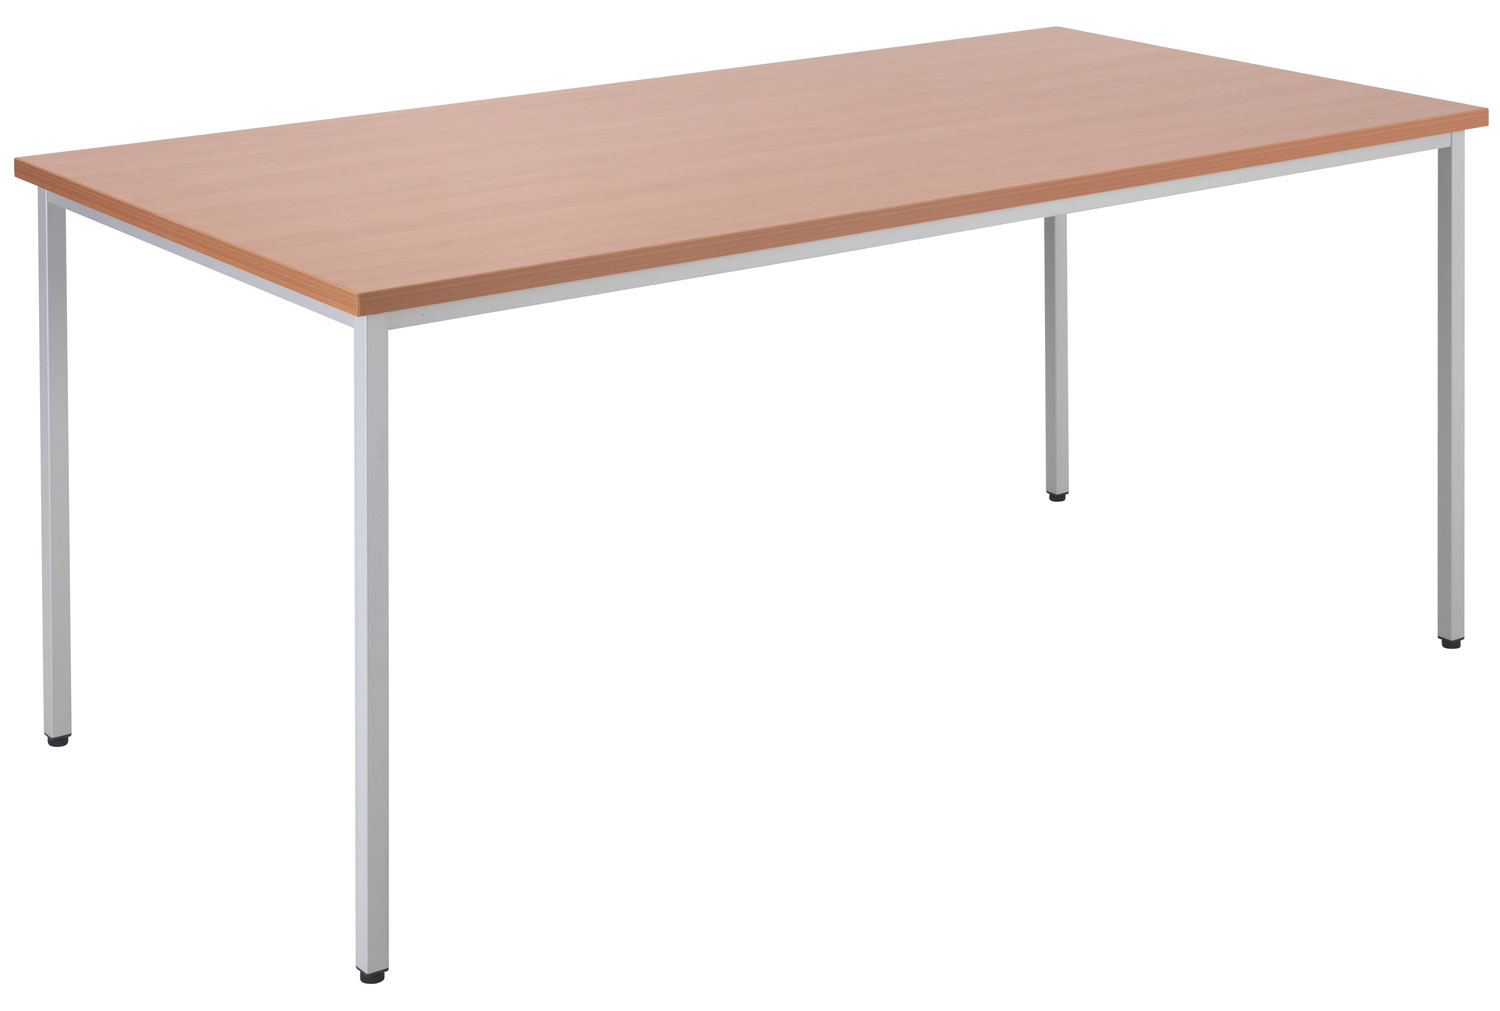 Origin Rectangular Conference Table, 160wx80dx73h (cm), White